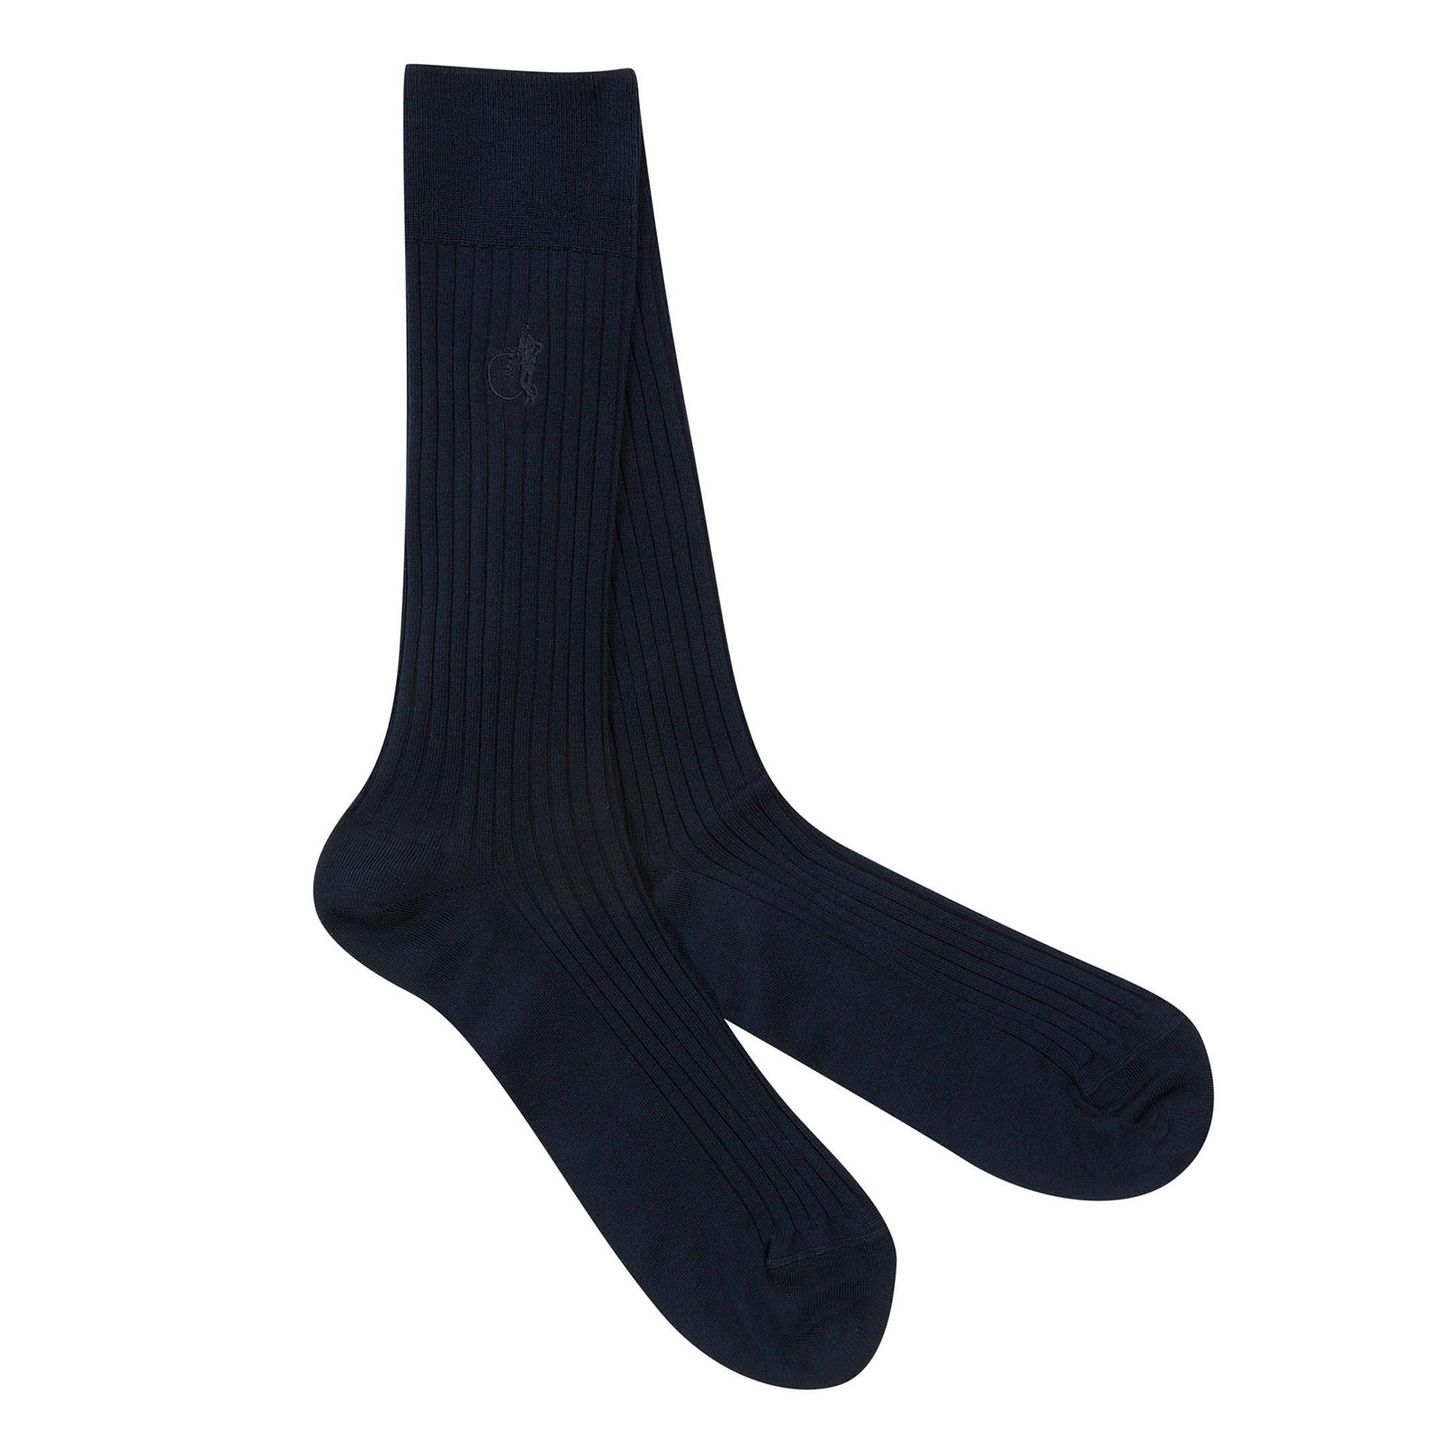 Pair of simply sartorial socks in a dark blue